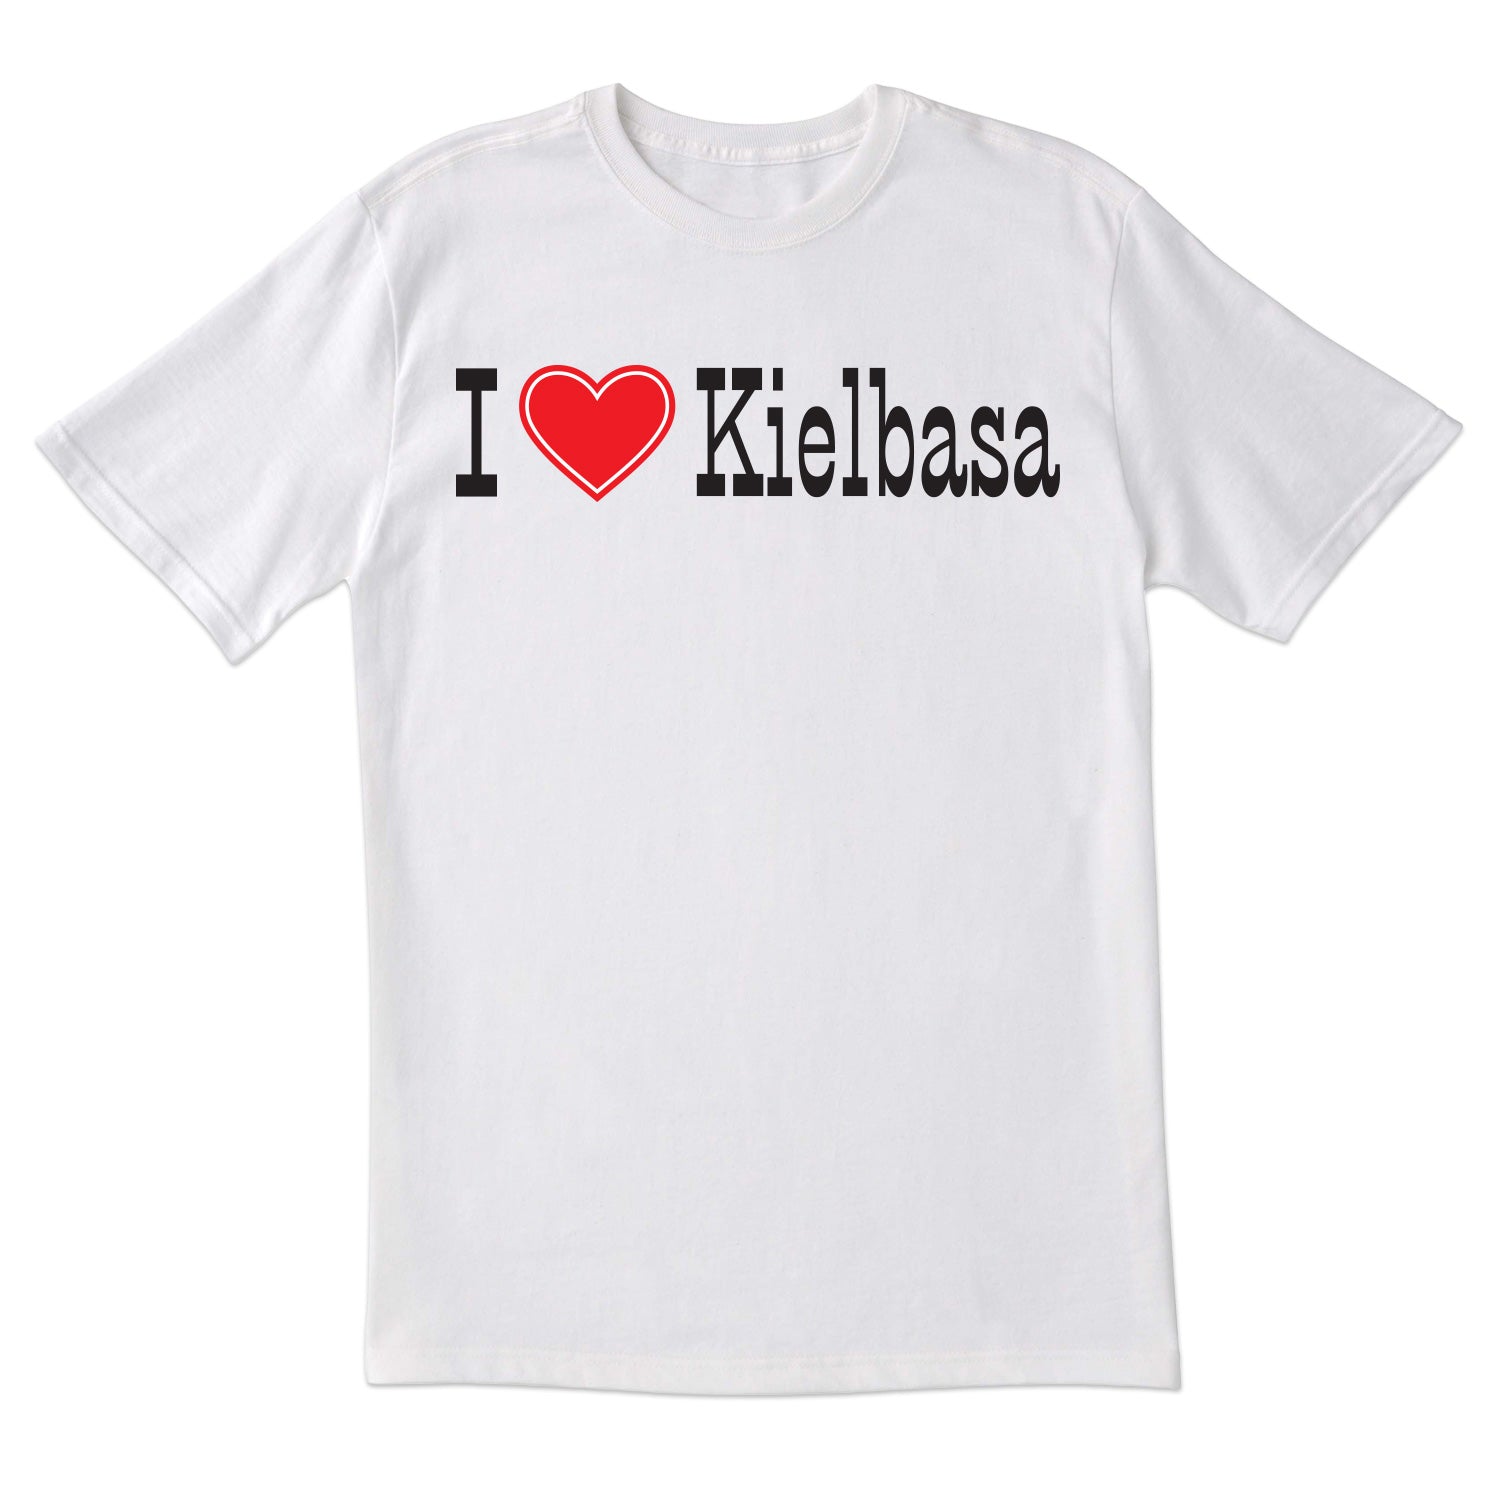 I Love Kielbasa Short Sleeve Tshirt